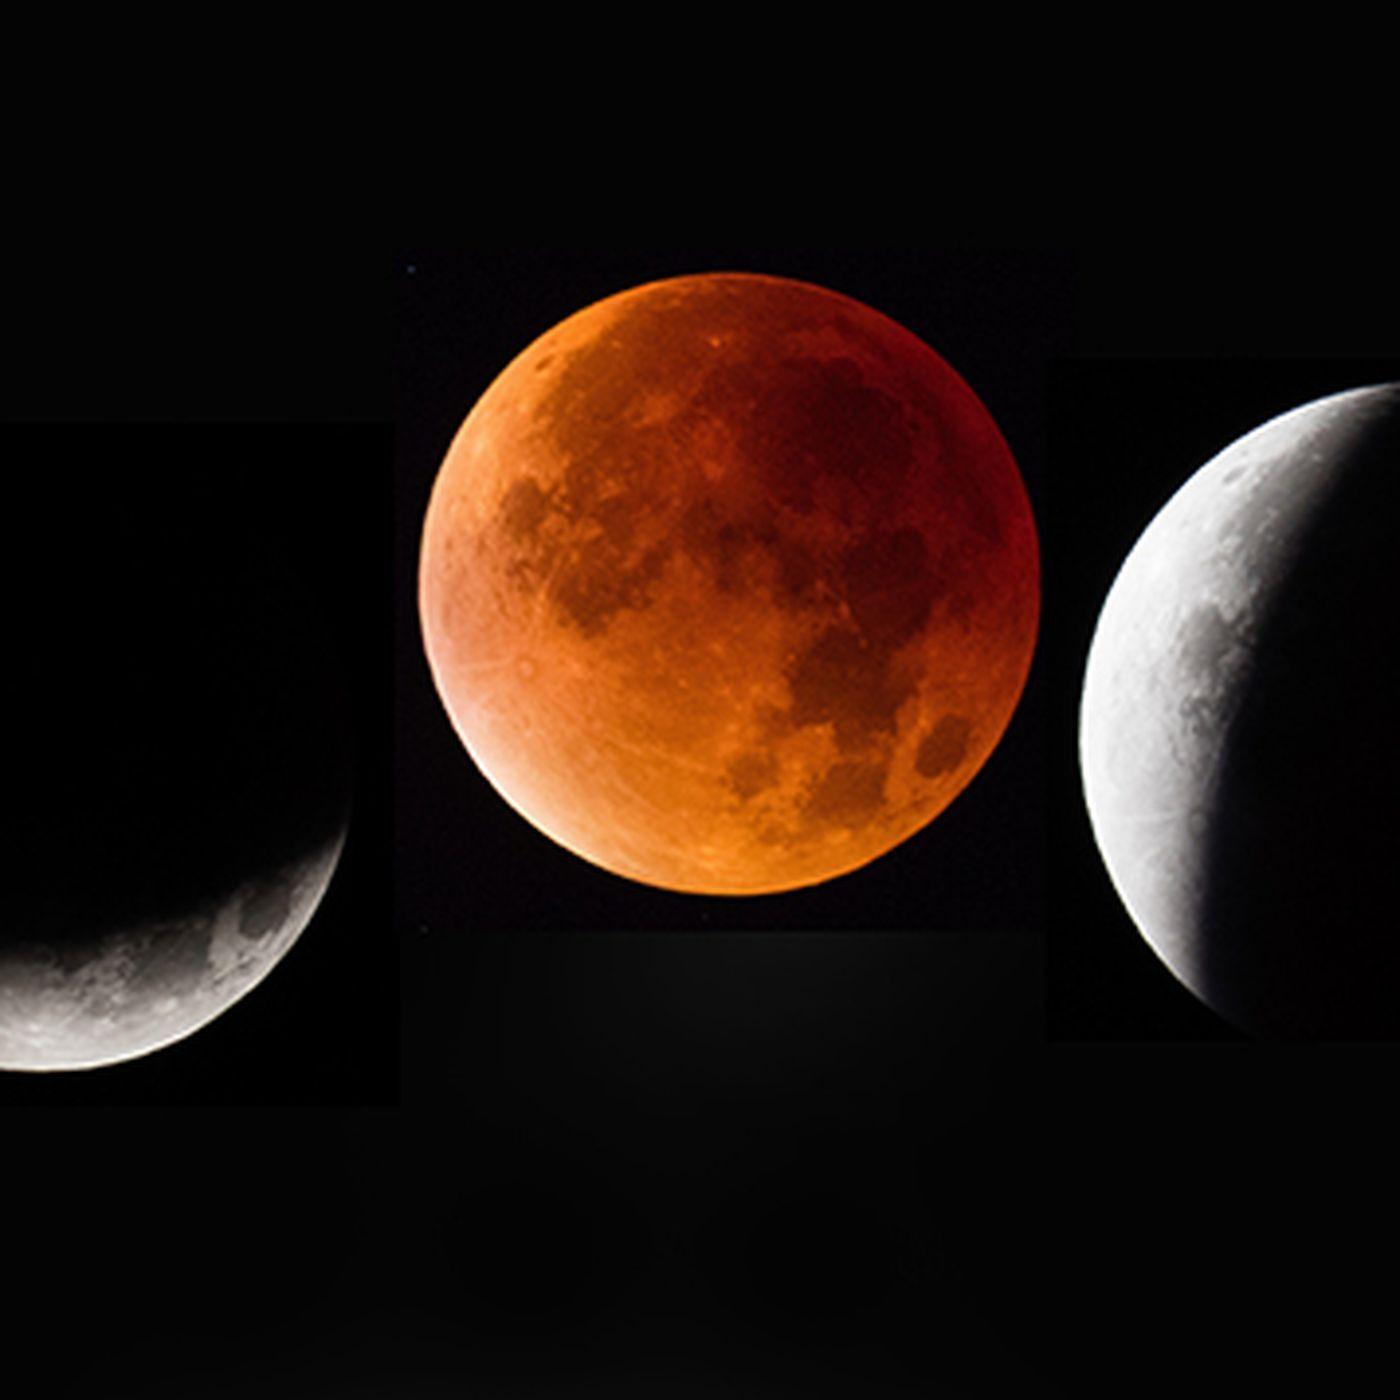 Lunar eclipse 2018: watch NASA's livestream